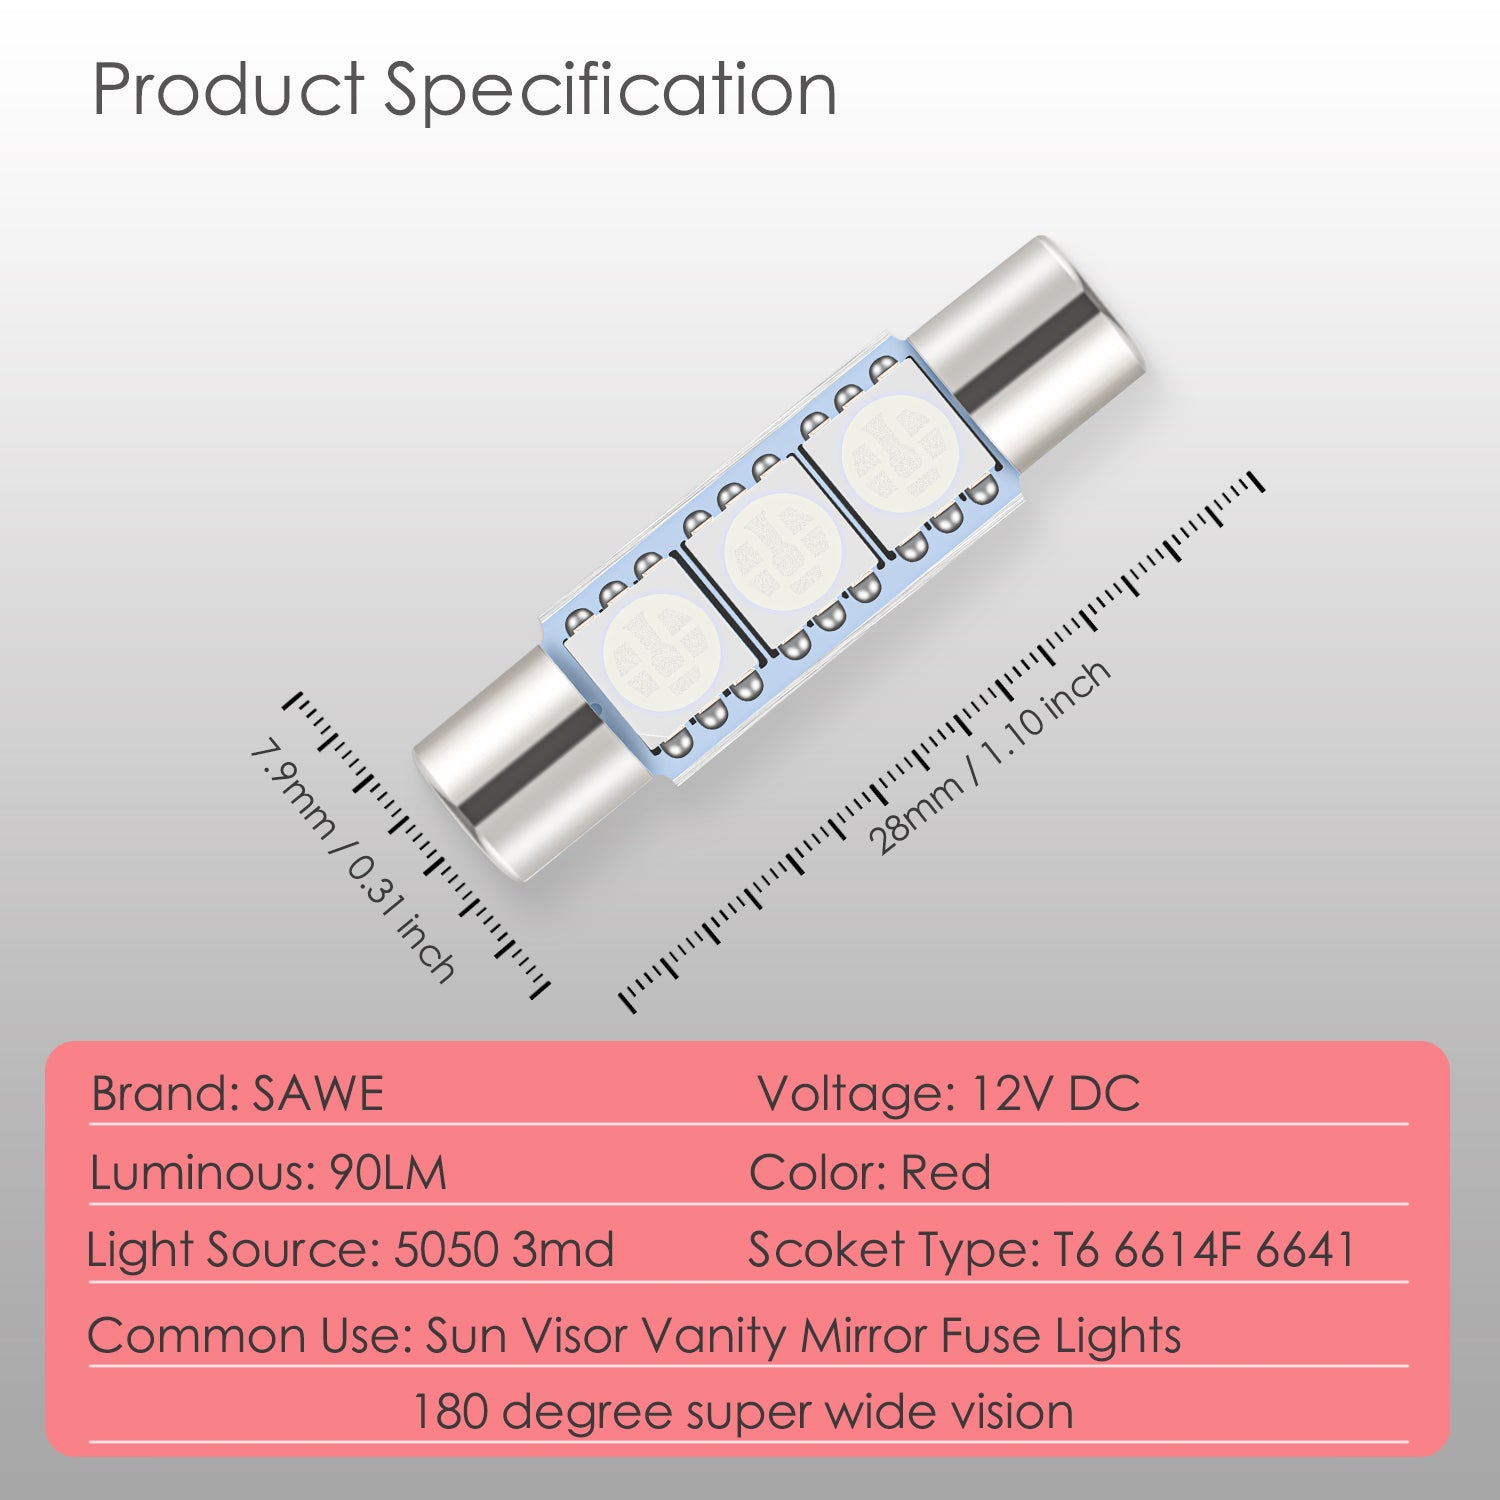 SAWE ® 28mm 3SMD T6 6641 LED Bulbs Sun Visor Vanity Mirror Fuse Lights - Red